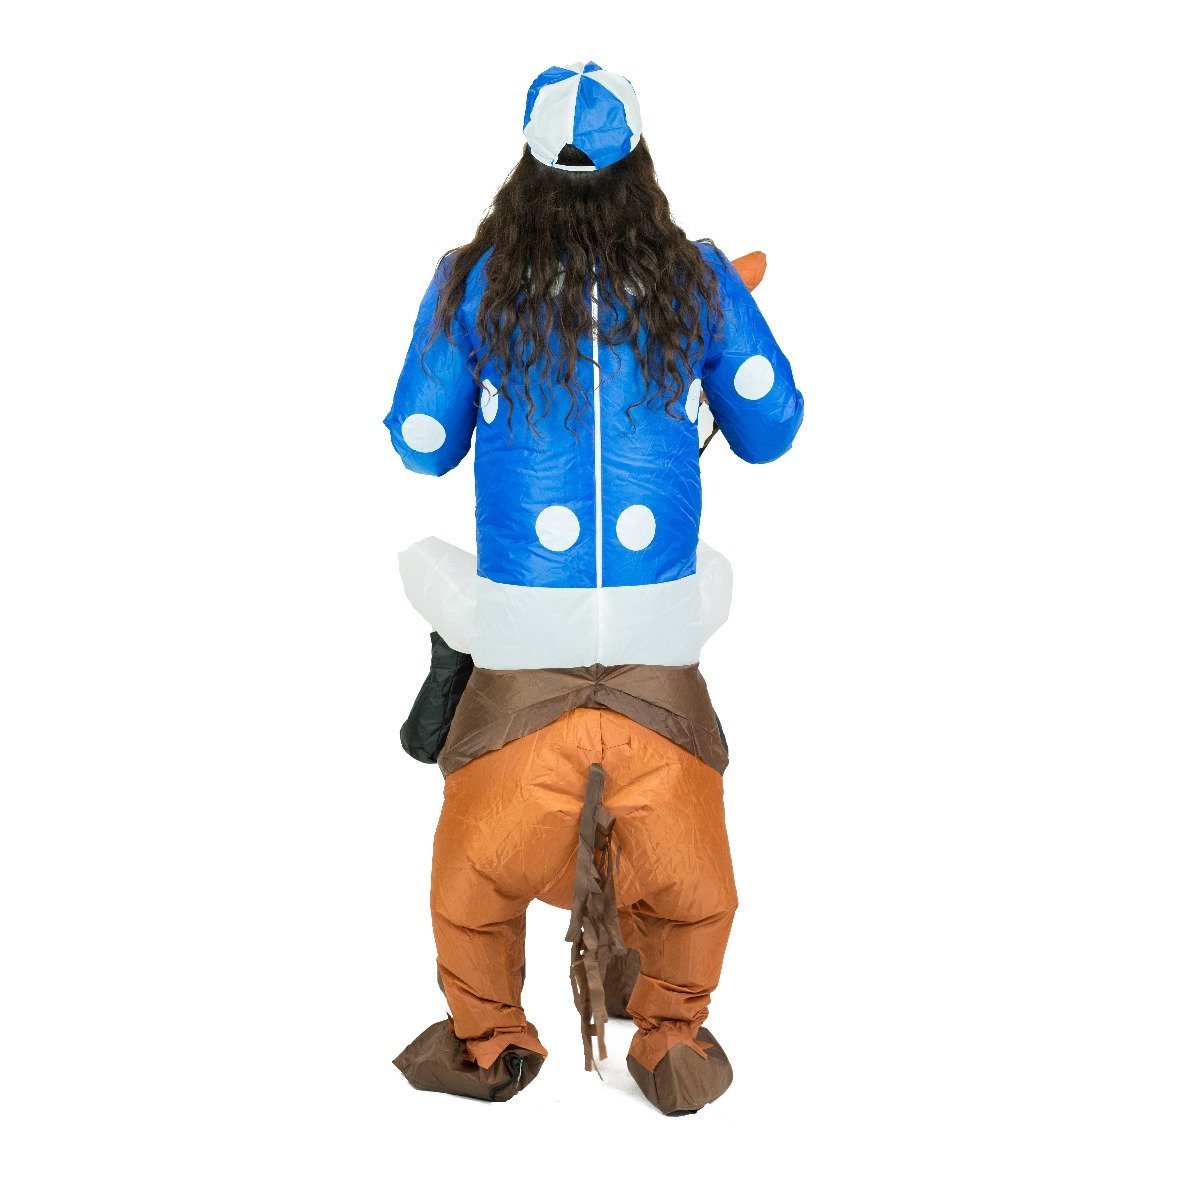 Bodysocks - Inflatable Jockey Costume